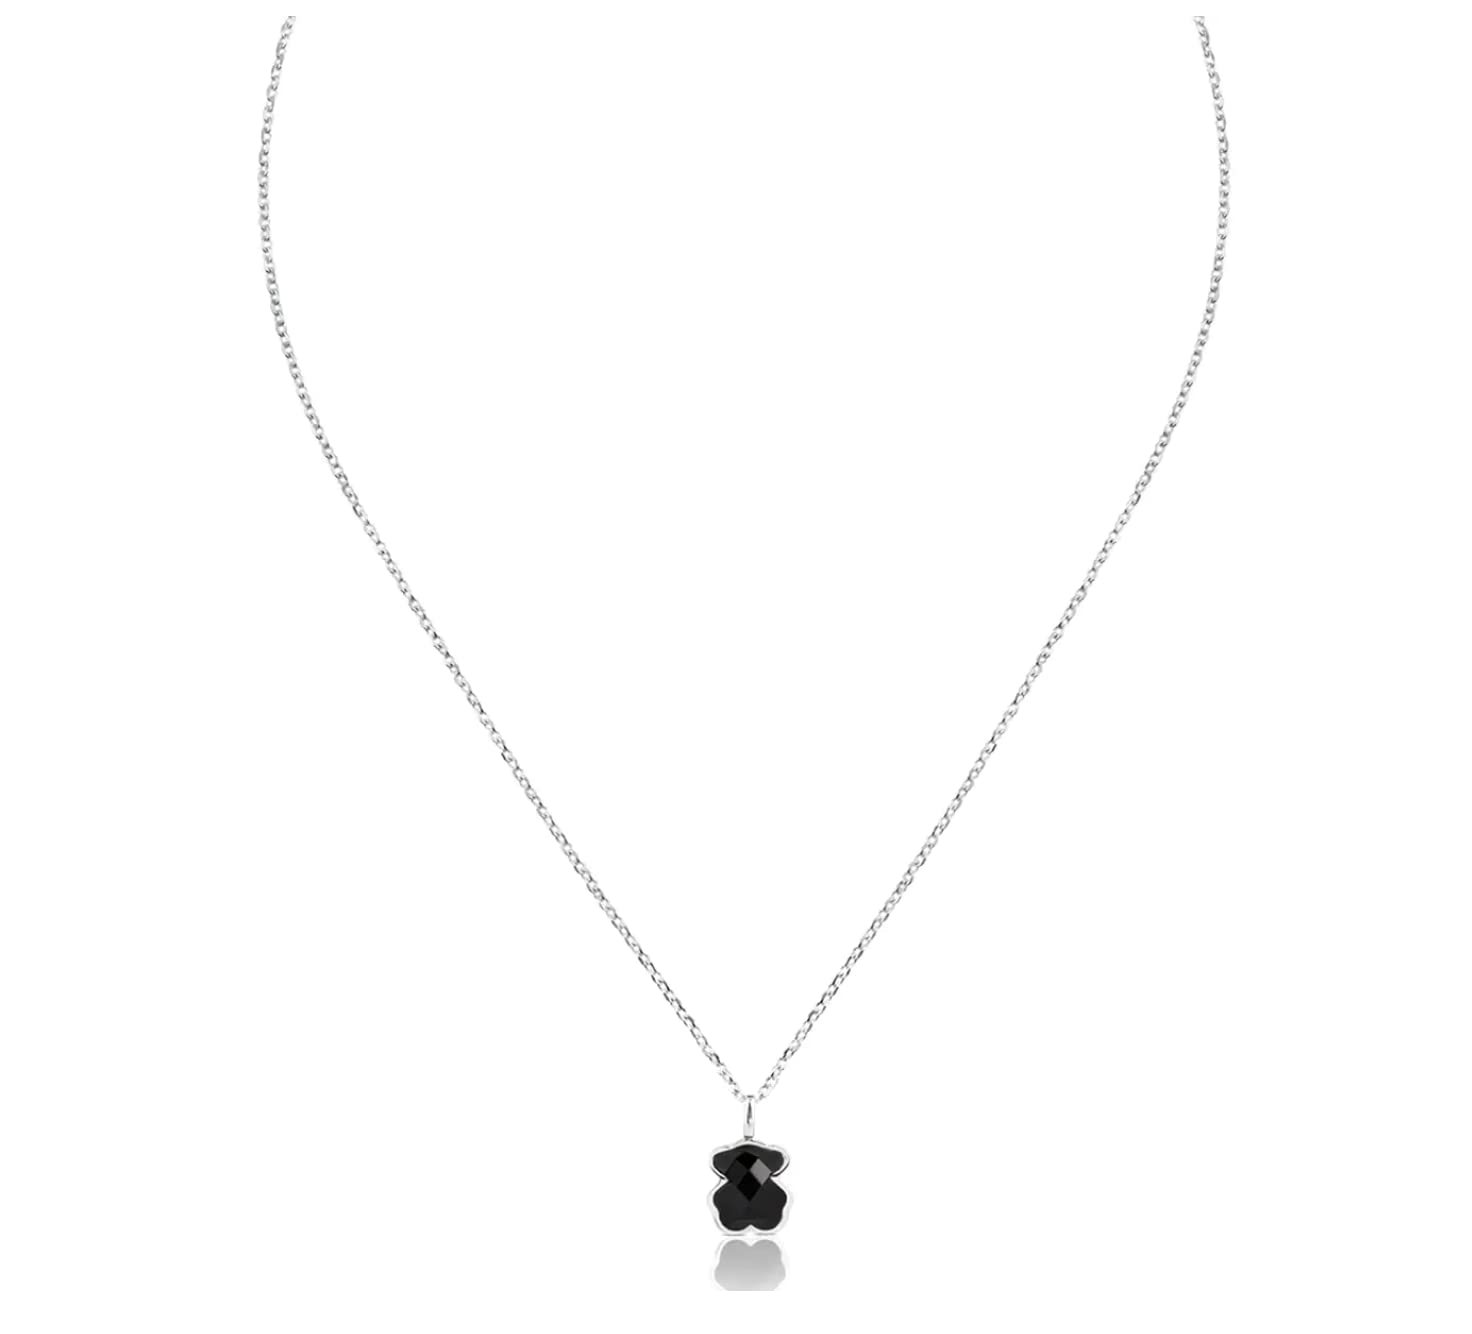 TOUS Necklace for Women with Bear Motif, Length: 45 cm, Color Collection